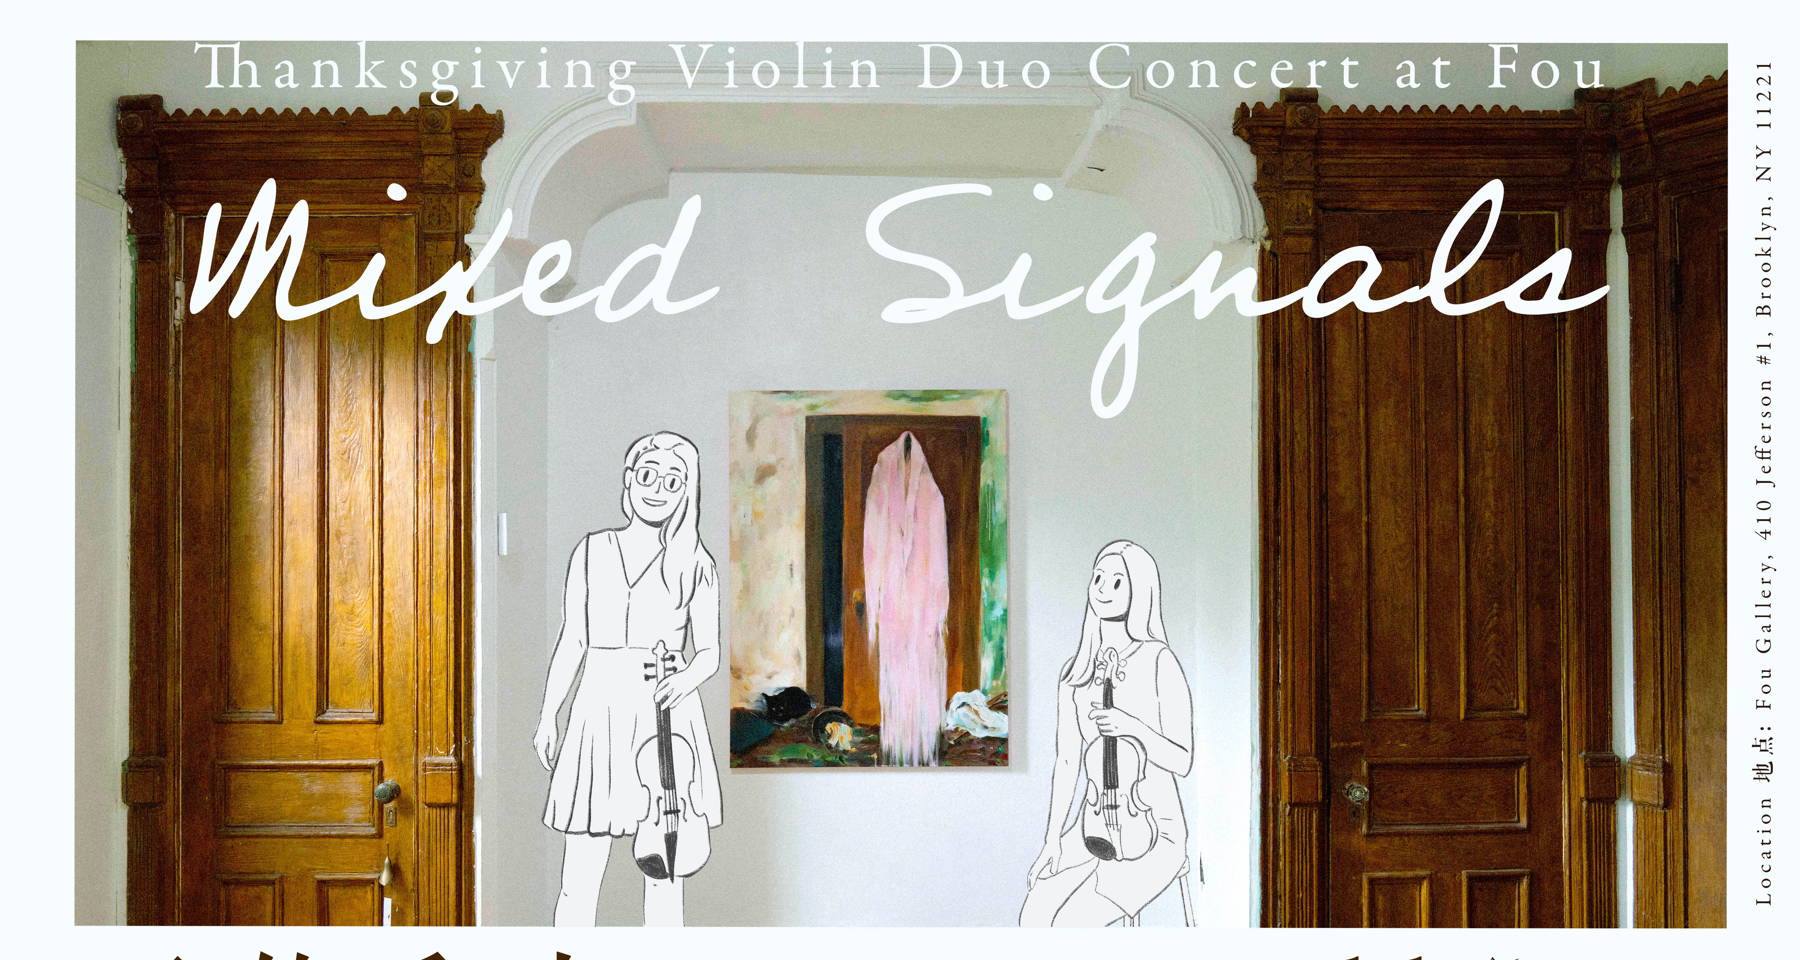 Mixed Signals: Thanksgiving Violin Duo Concert at Fou